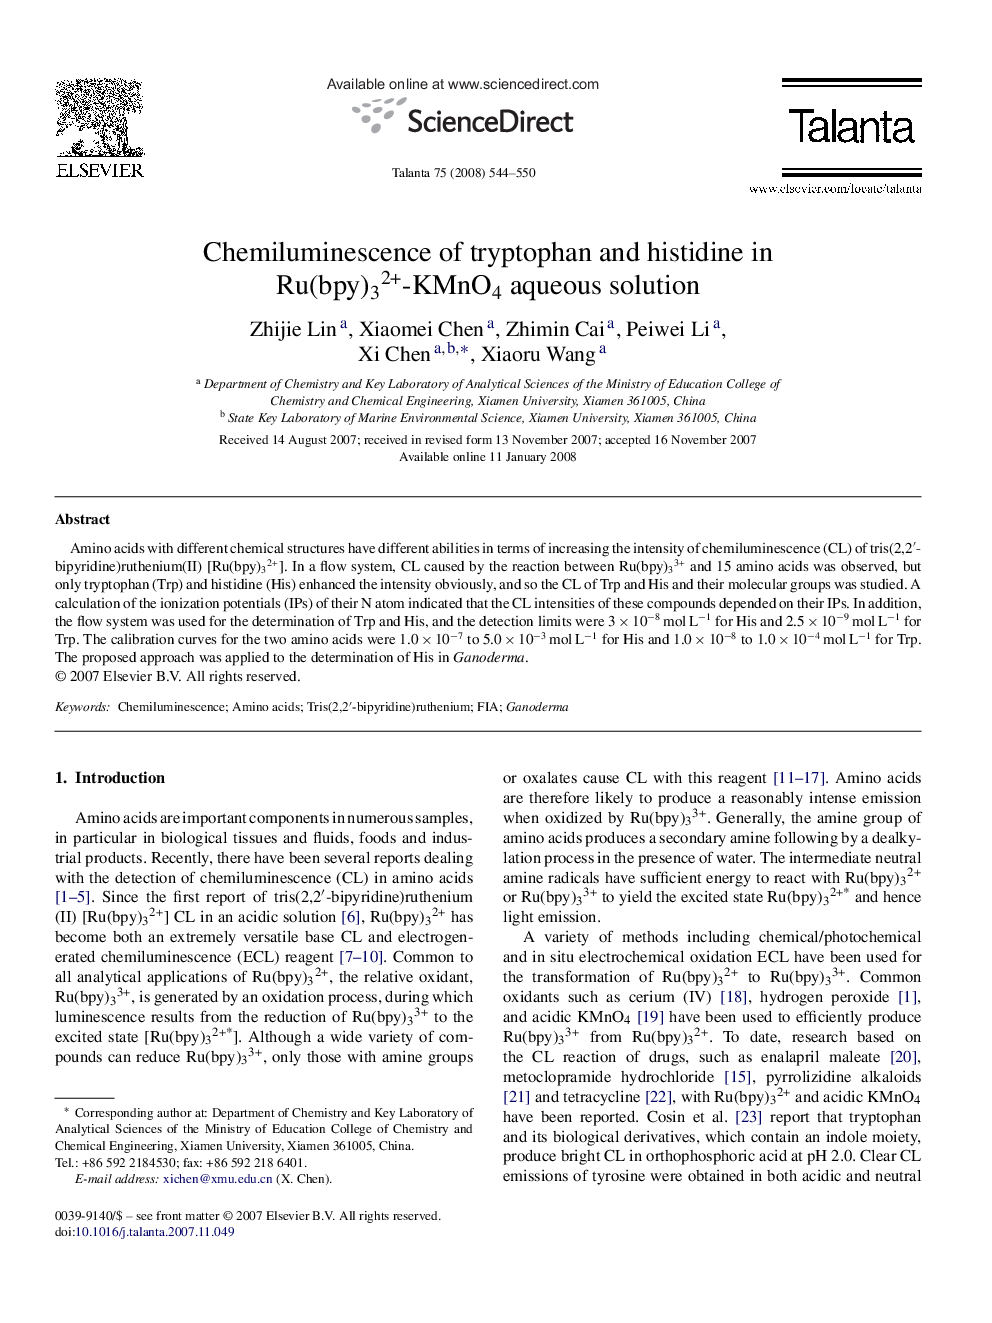 Chemiluminescence of tryptophan and histidine in Ru(bpy)32+-KMnO4 aqueous solution